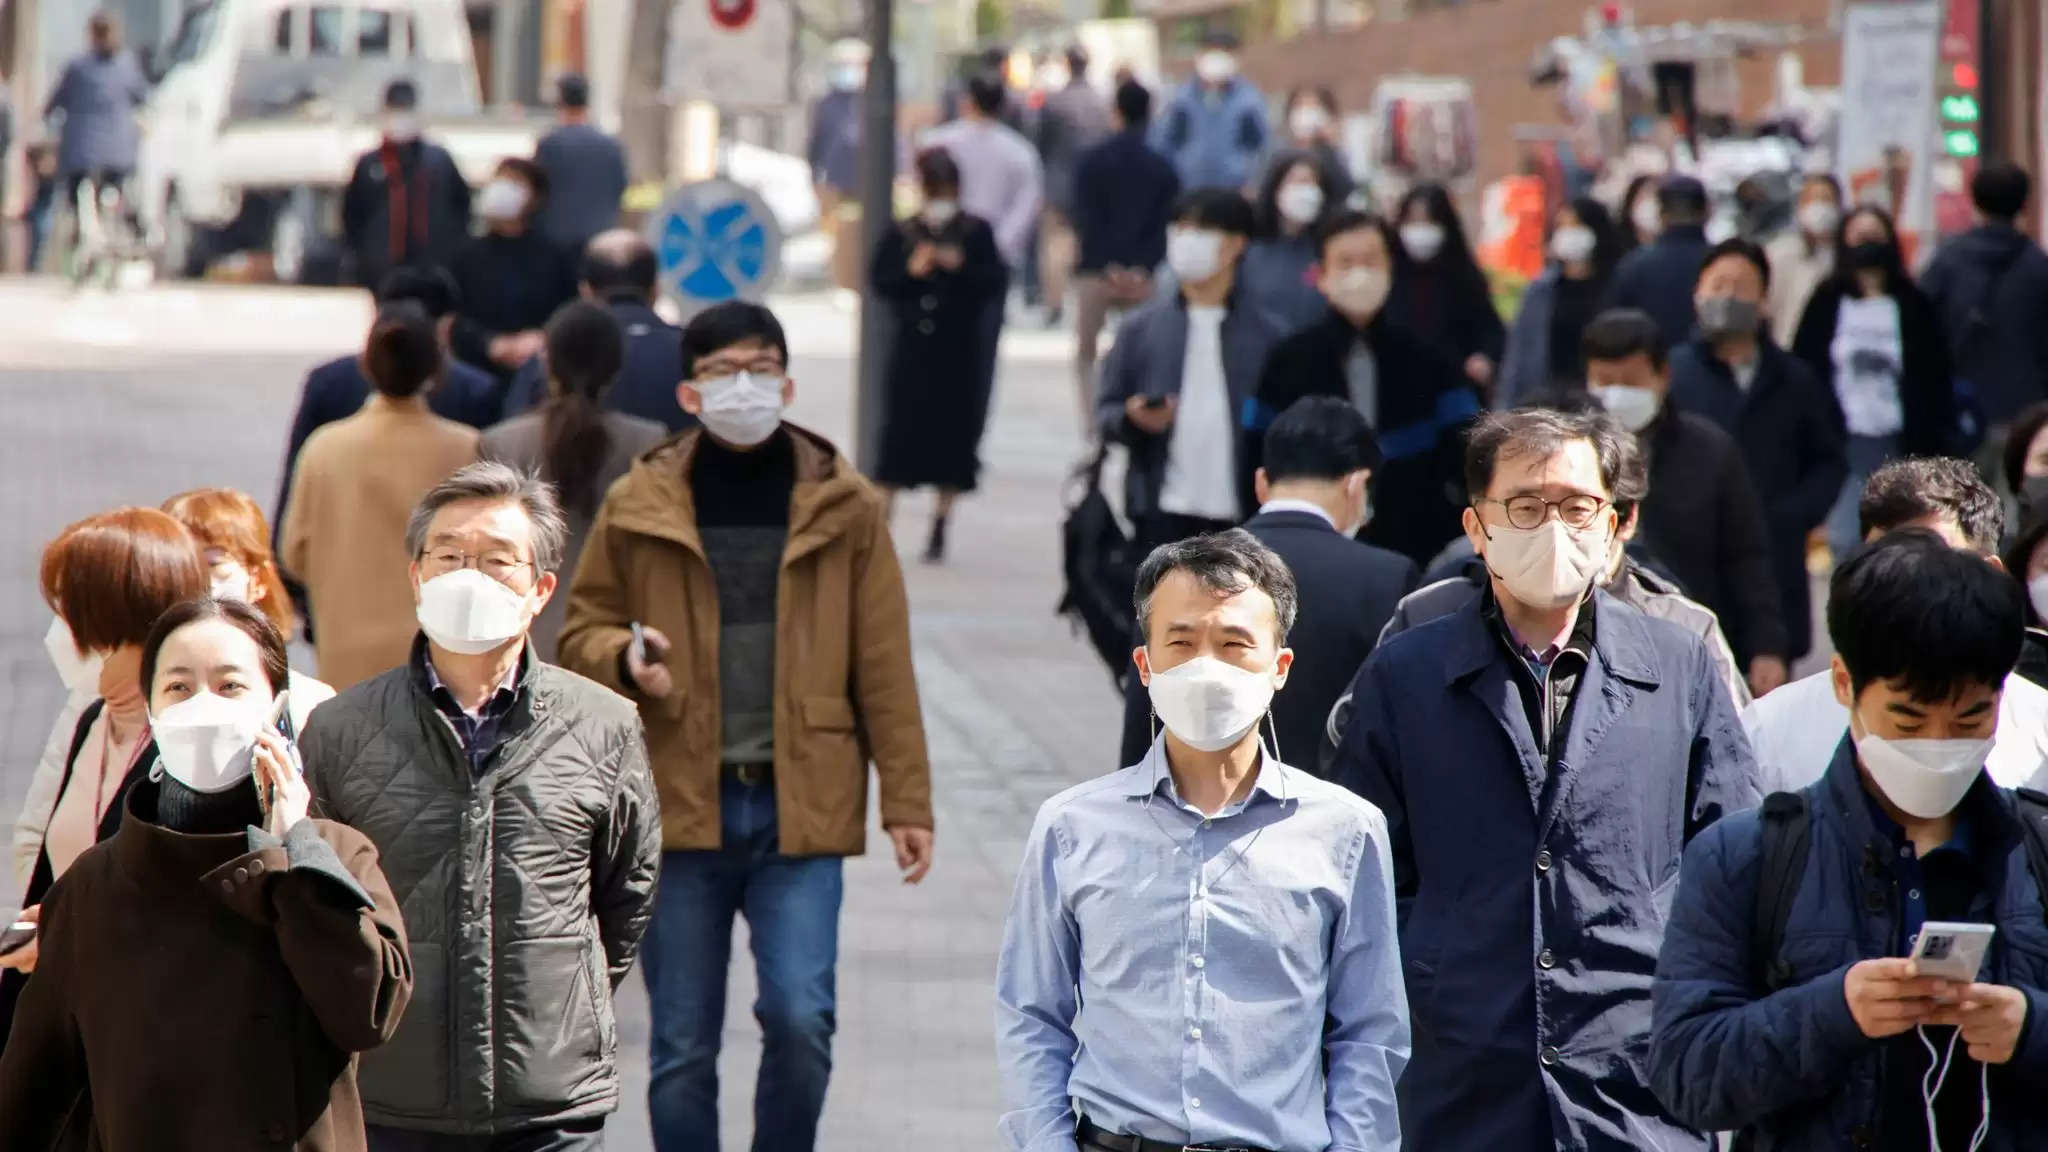 S.KOREA UPDATE: Korea will remove all outdoor masks from next week